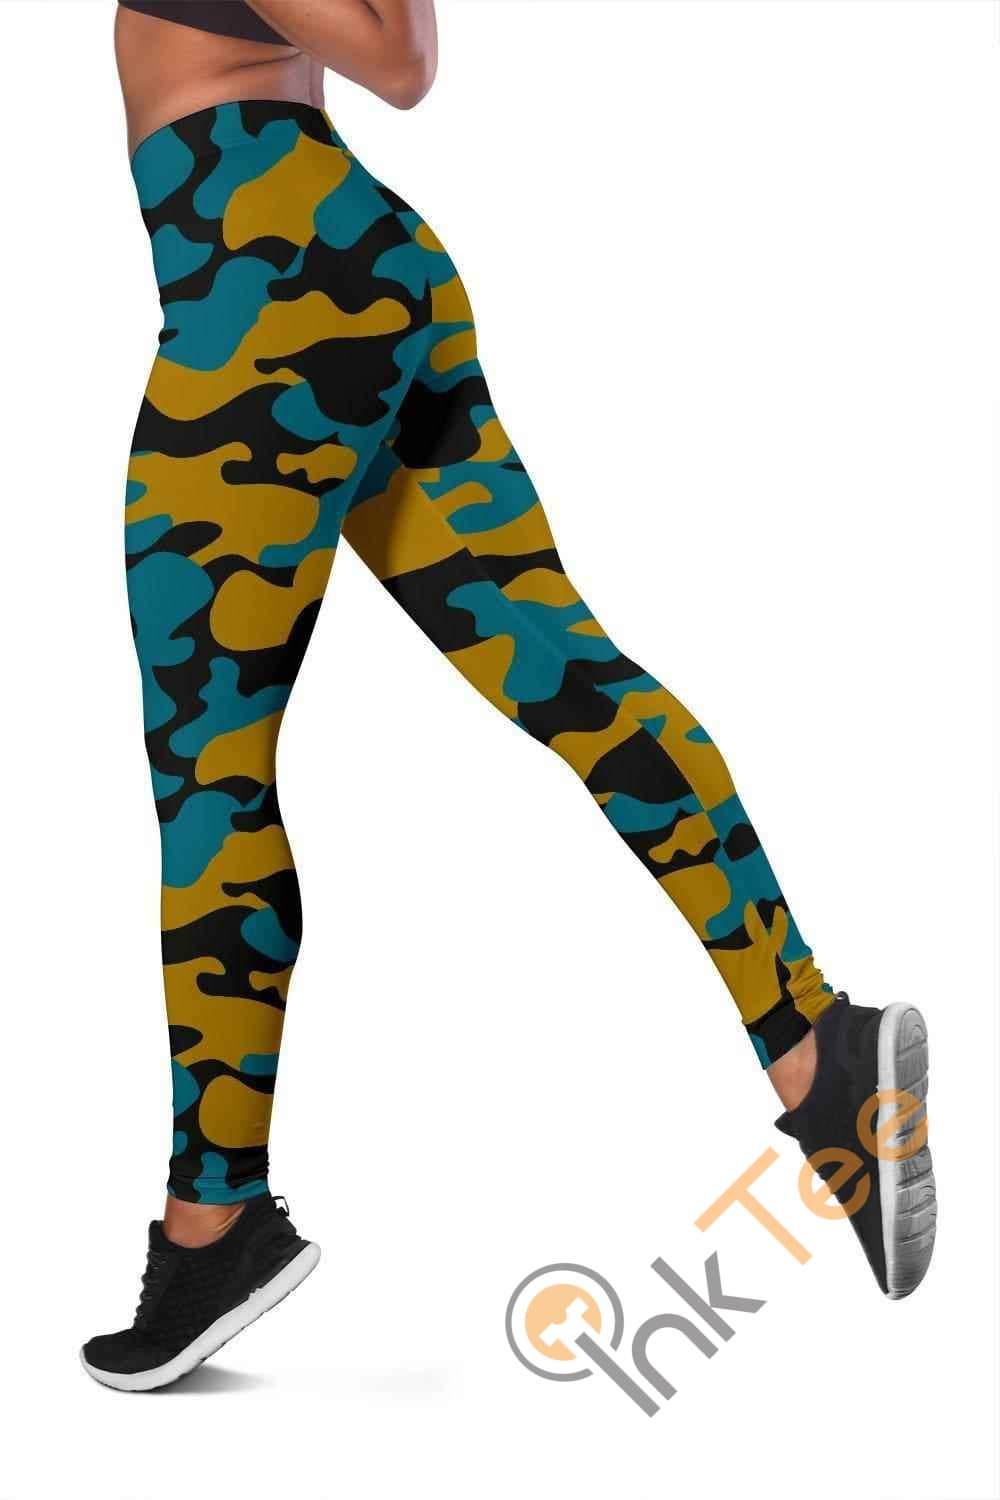 Inktee Store - Jacksonville Jaguars Inspired Tru Camo 3D All Over Print For Yoga Fitness Fashion Women'S Leggings Image